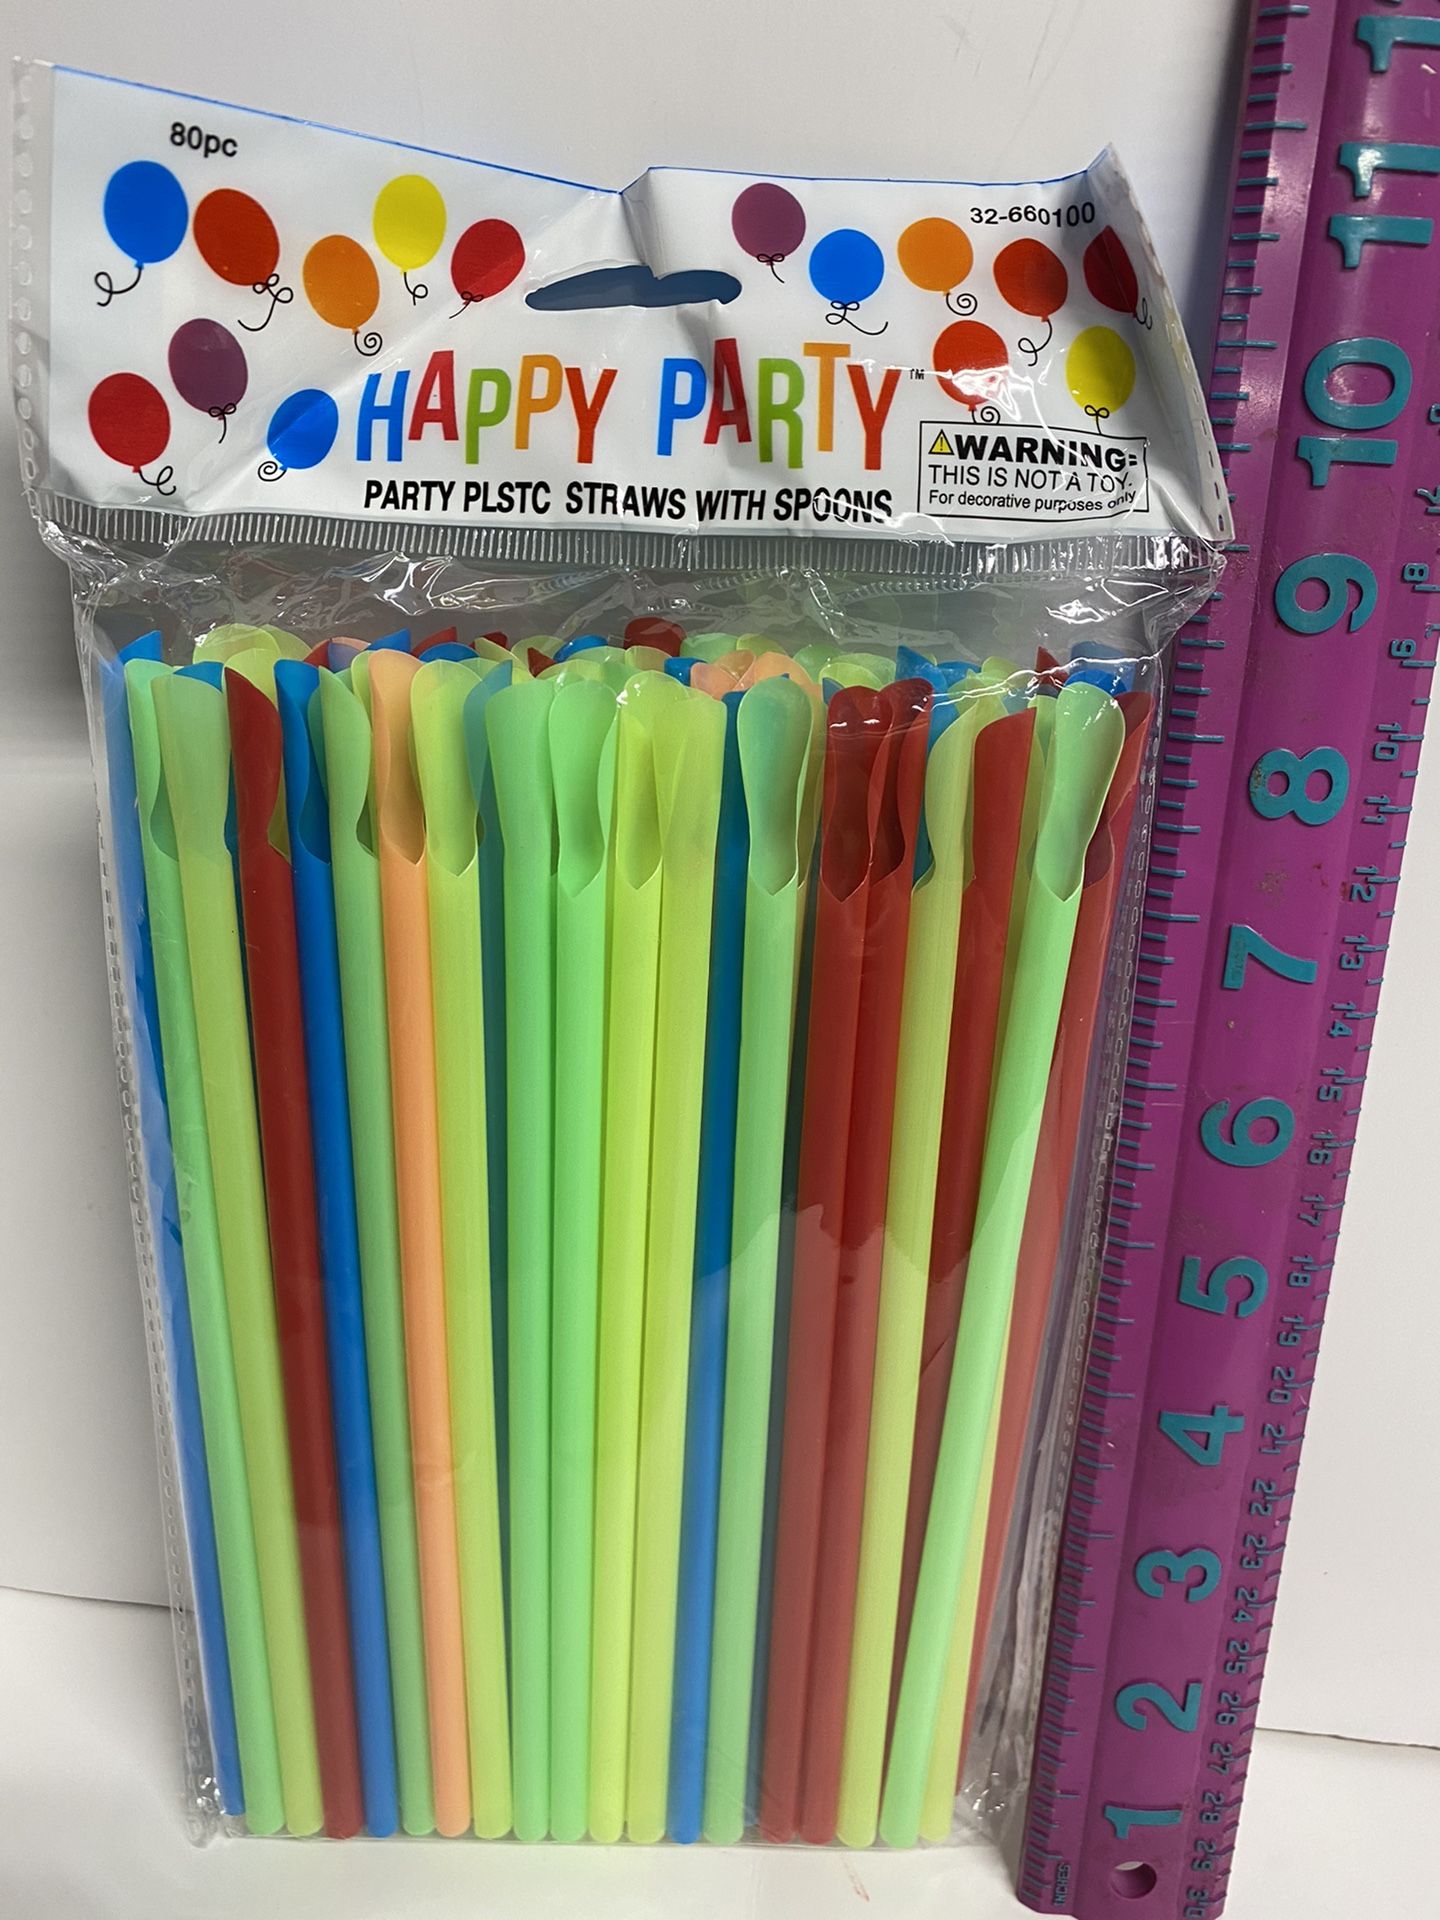 Plastic straws with spoon